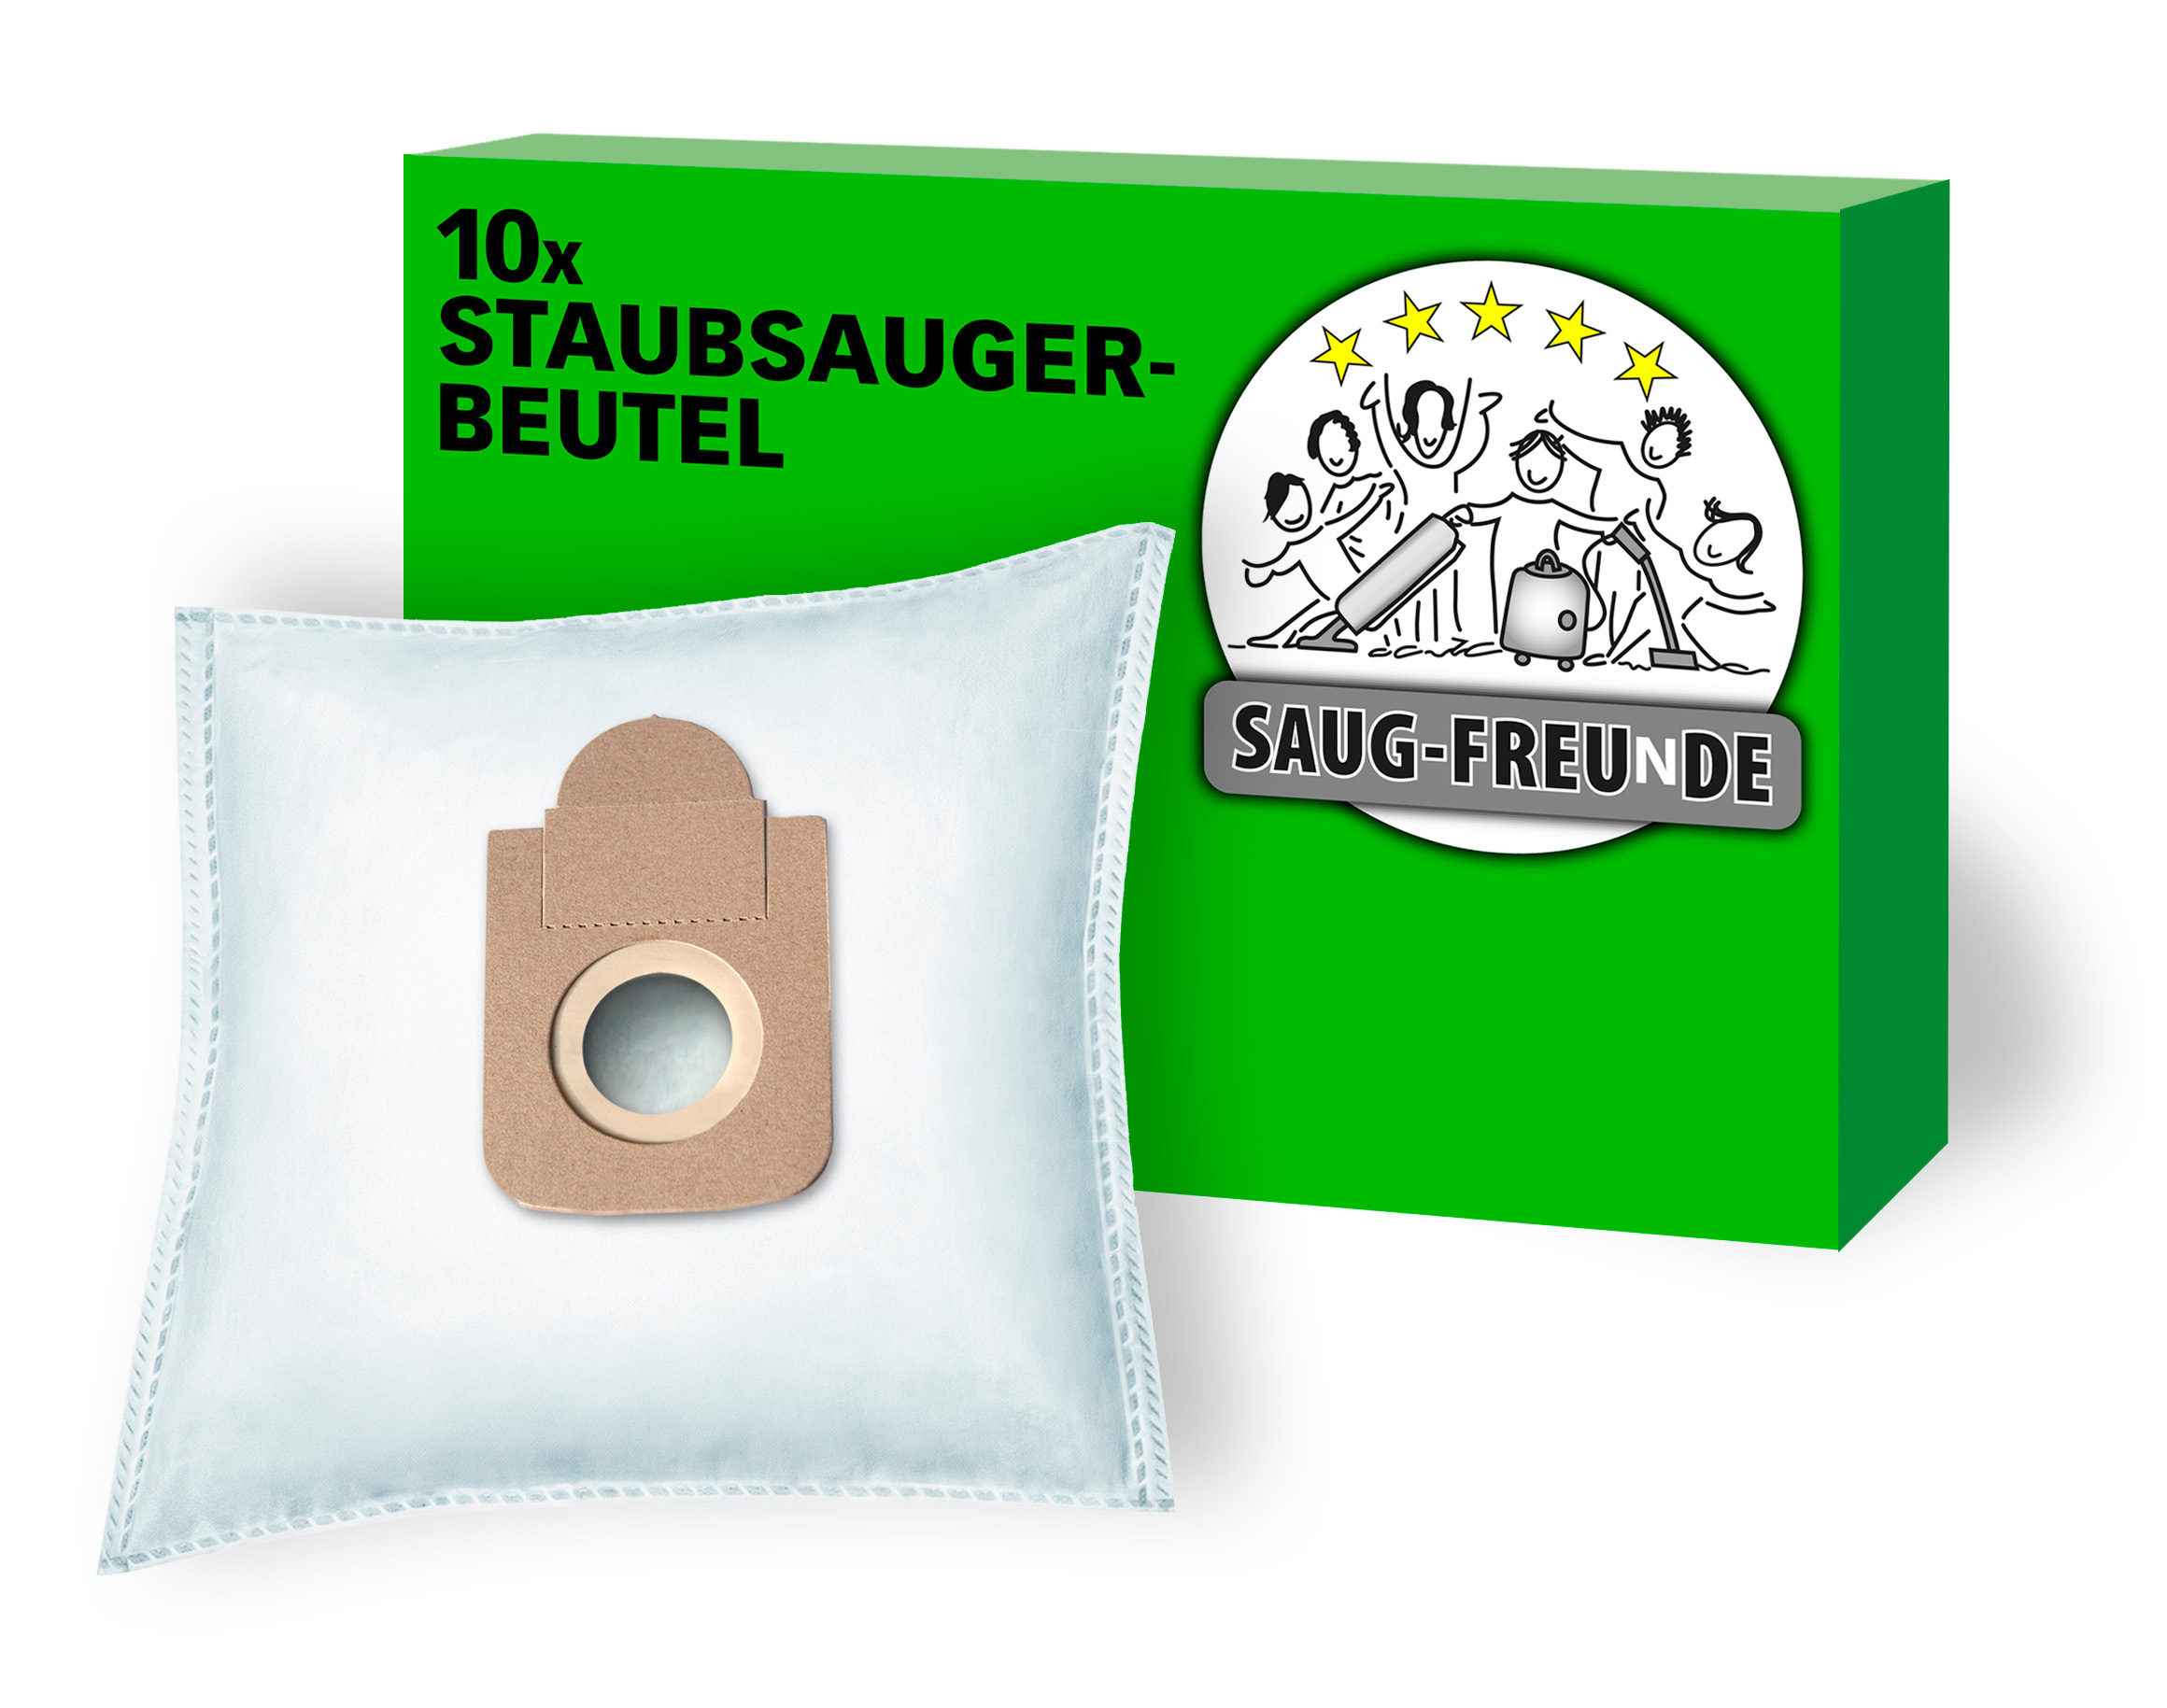 10x SAUG-FREUNDE Staubsaugerbeutel